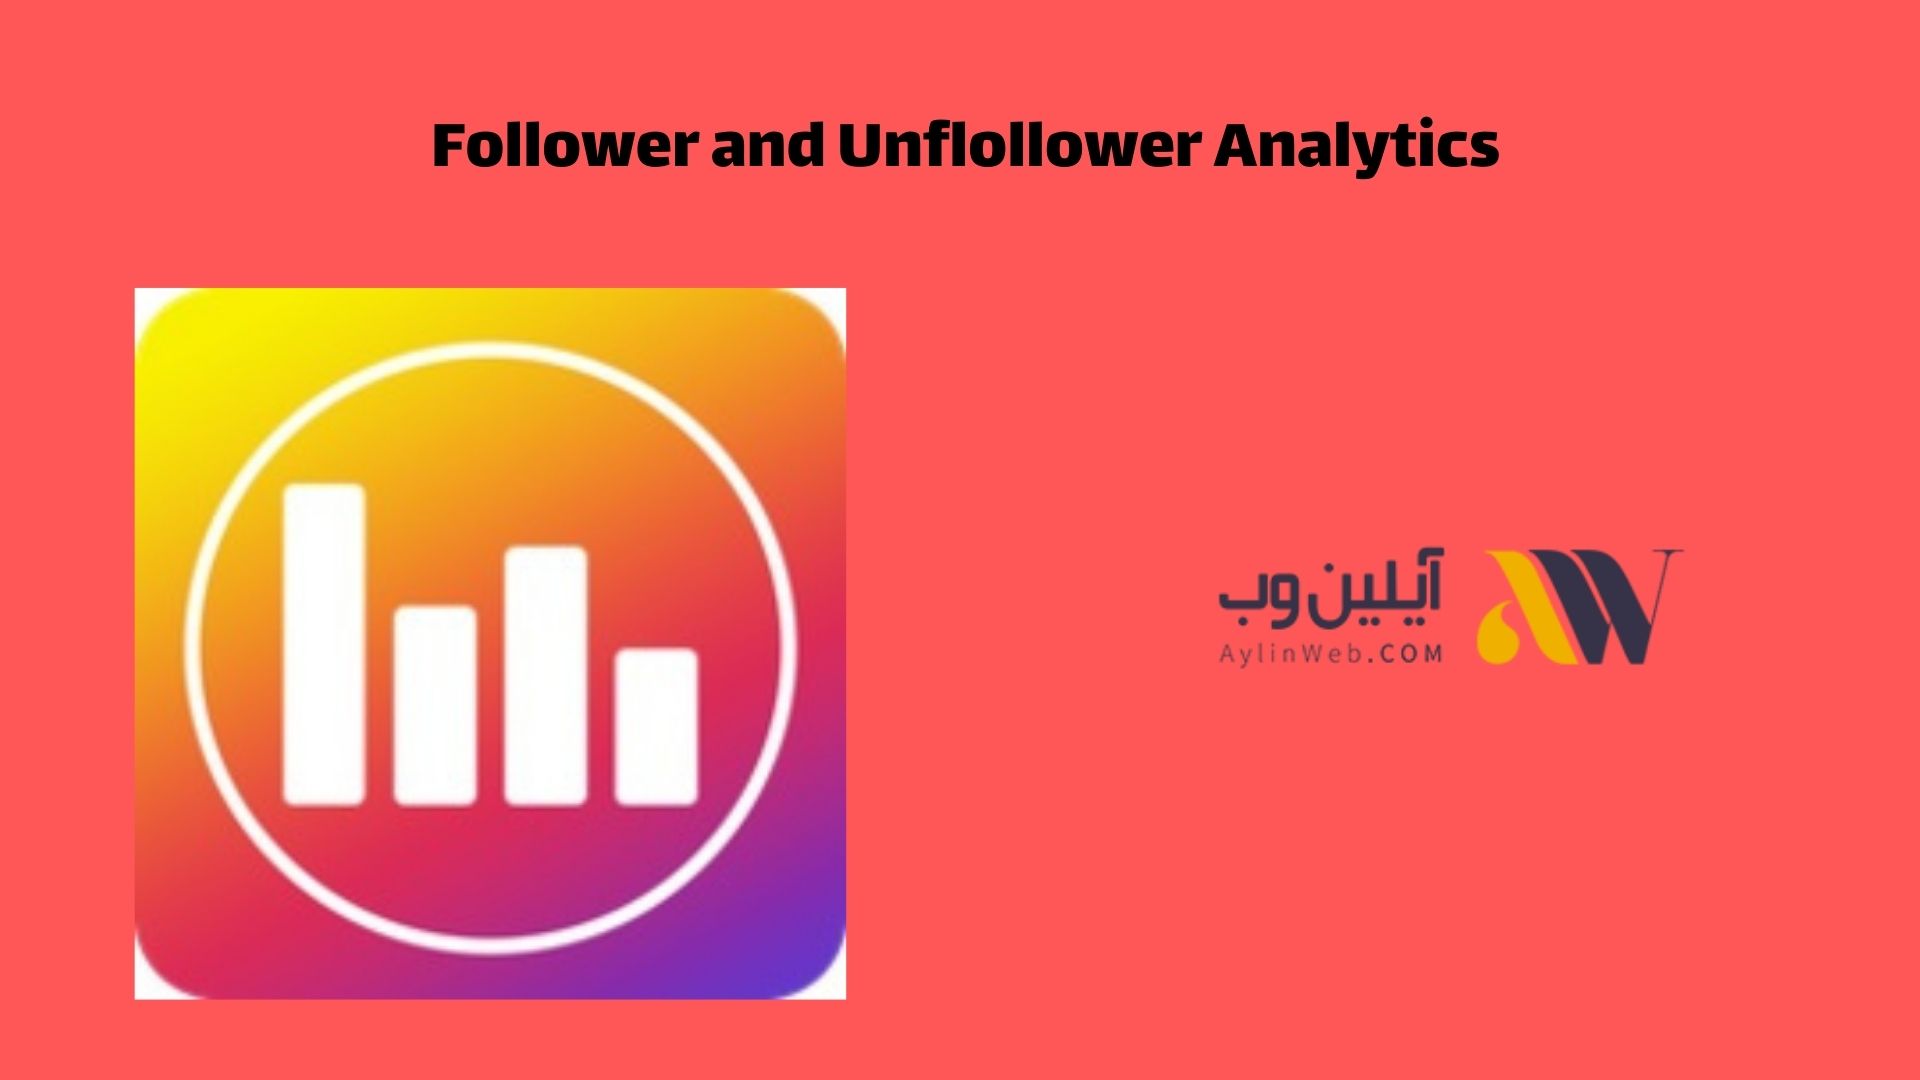 Follower and Unflollower Analytics